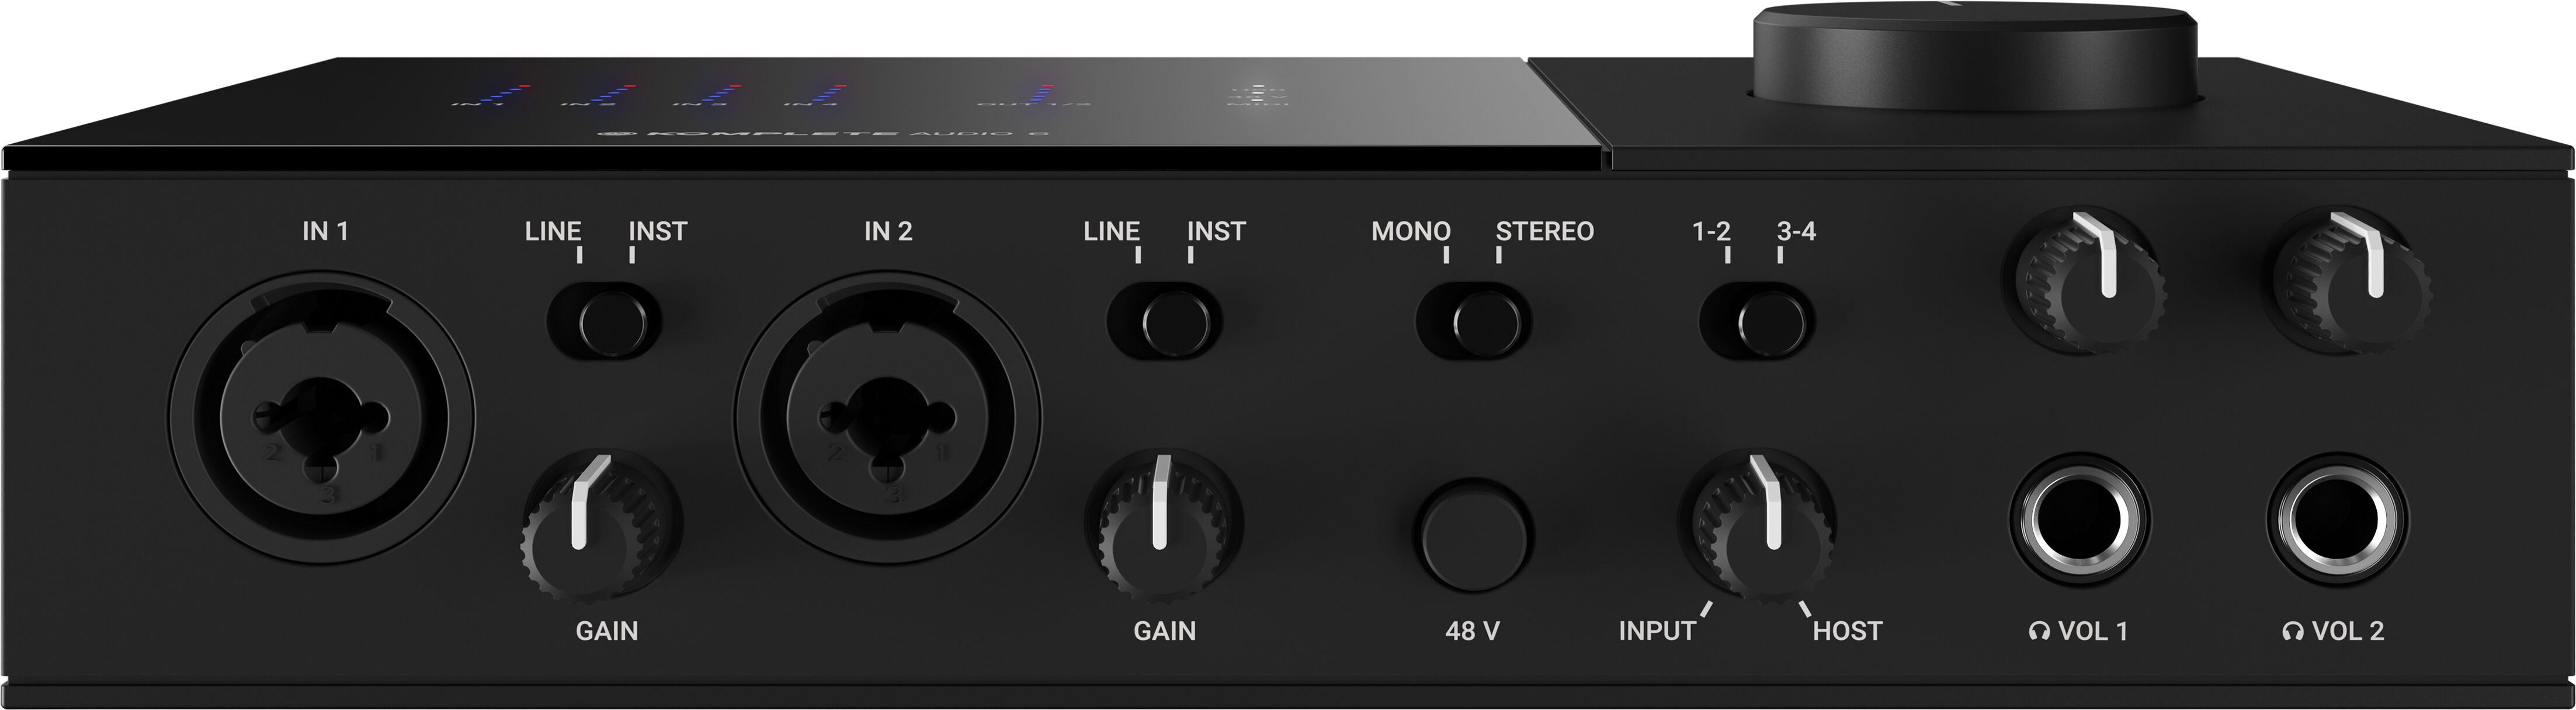 komplete audio 6 control panel download free